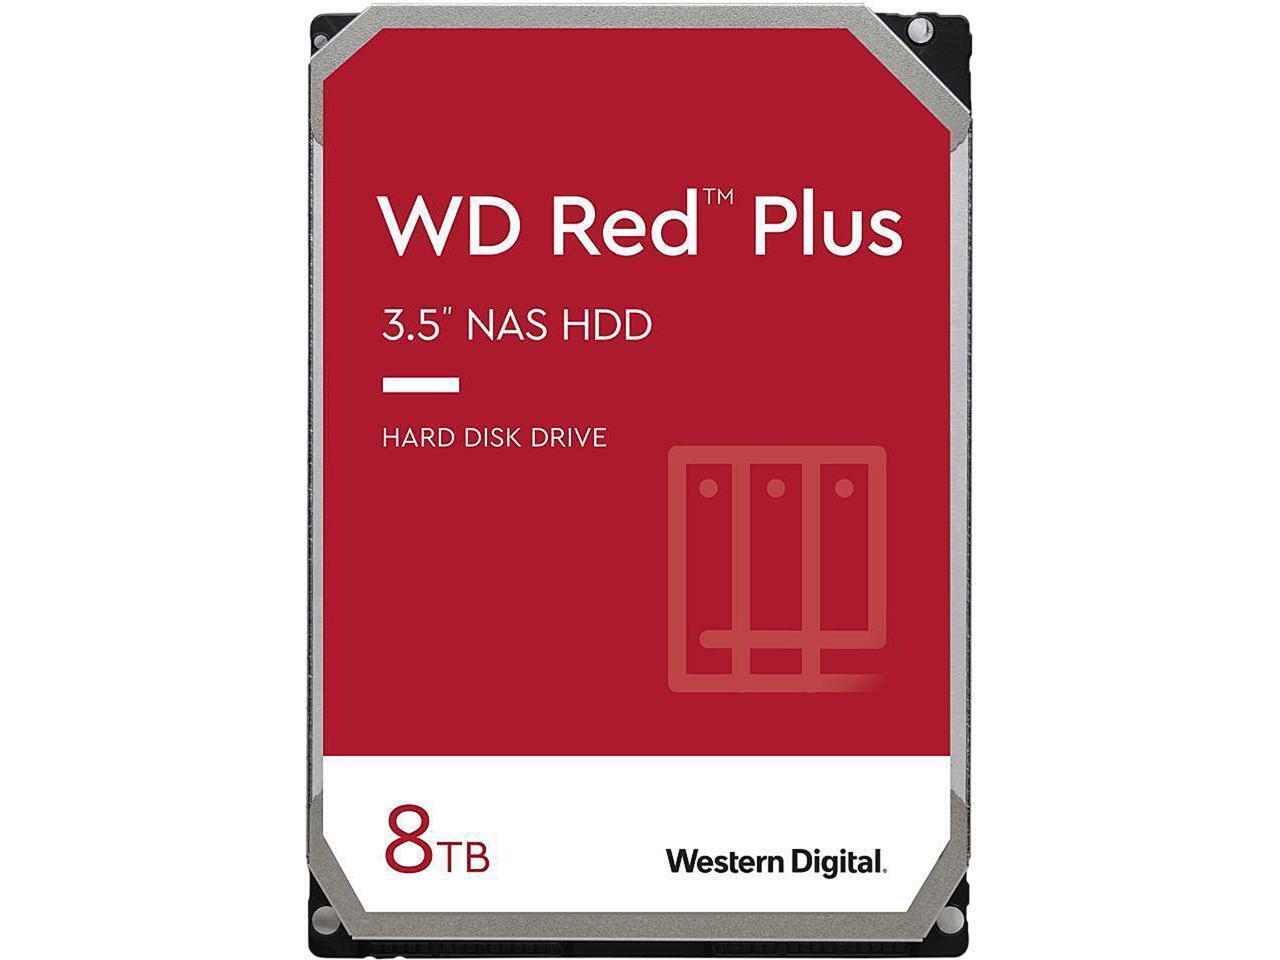 WD Red Plus 8TB CMR NAS Hard Drive HDD - 5640 RPM, SATA 6 Gb/s, 128MB Cache